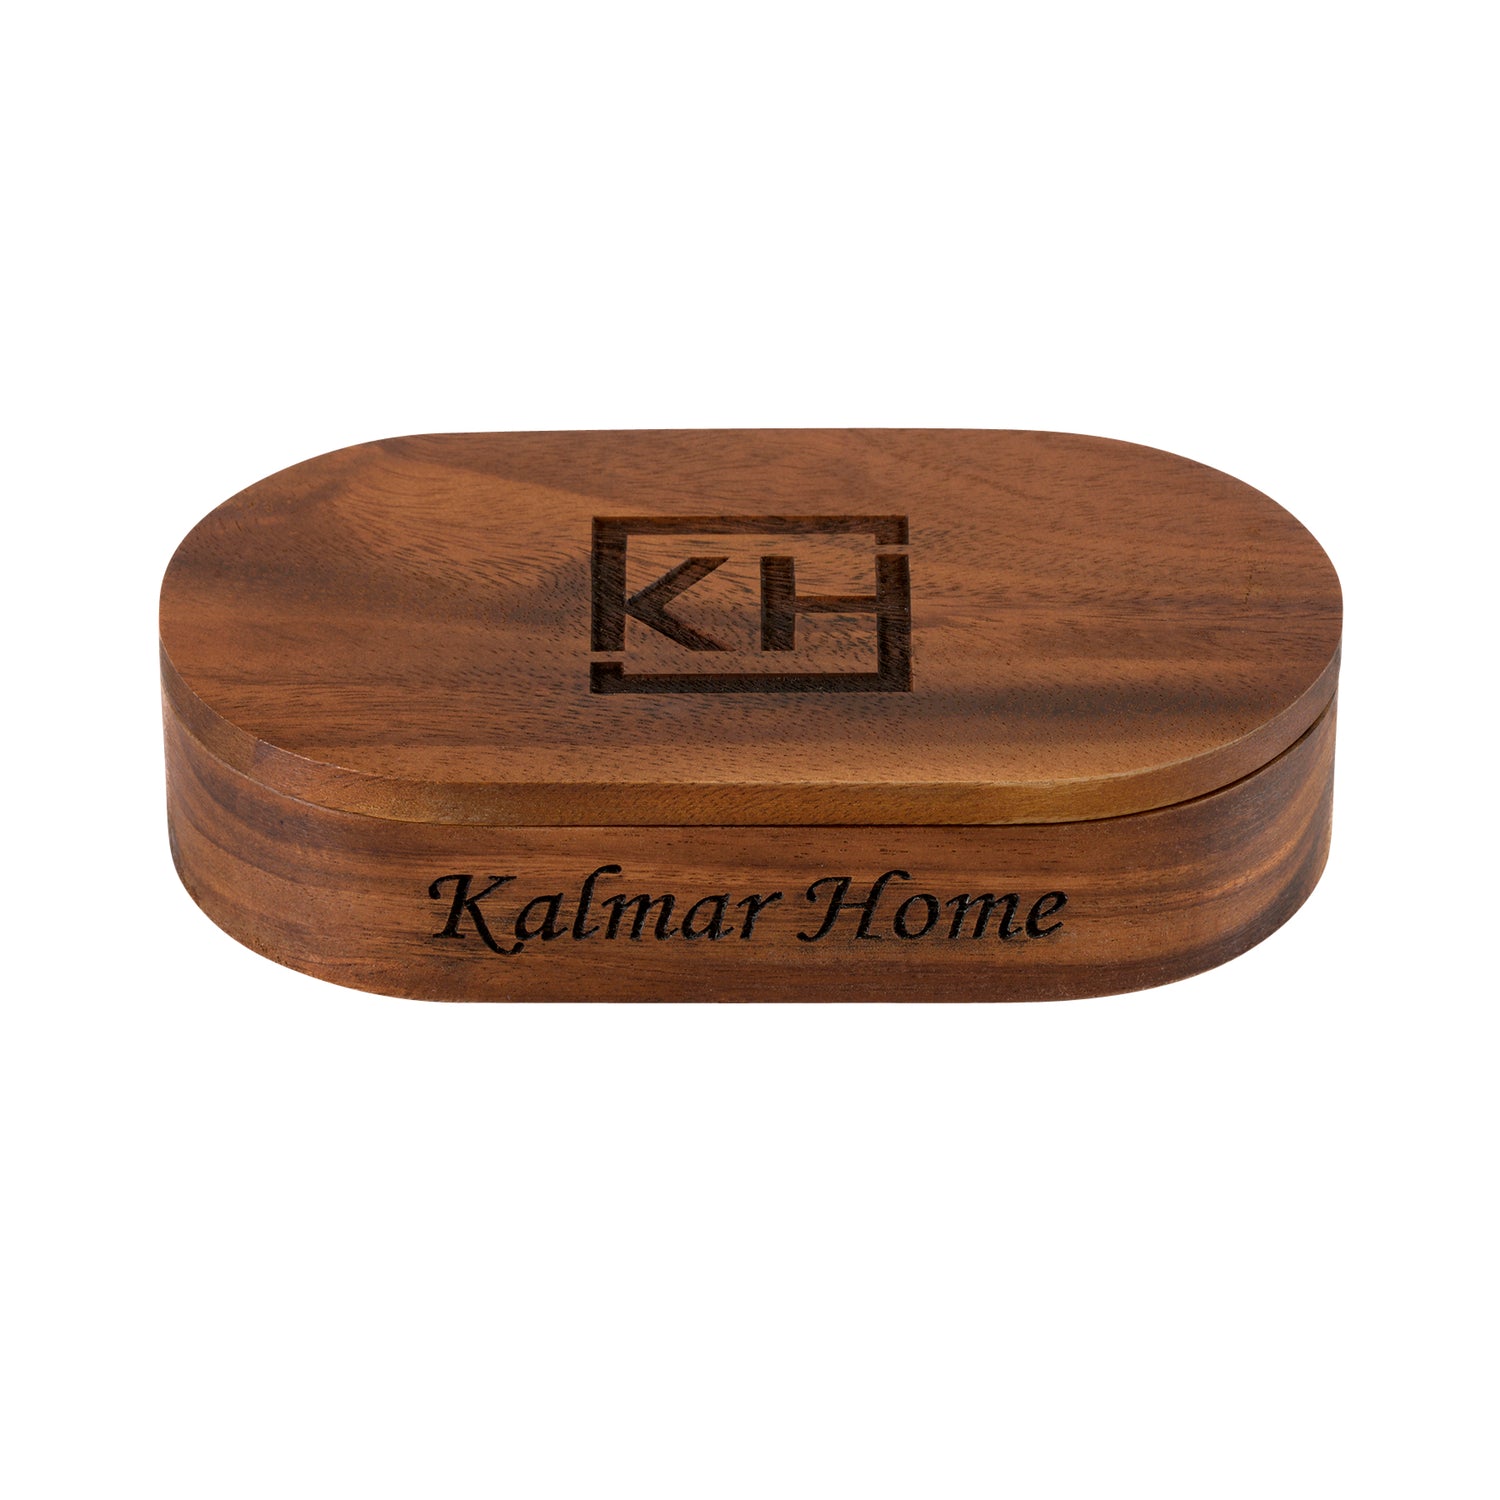 Kalmar Home Salad Bowl with Servers — Home/Work Santa Cruz